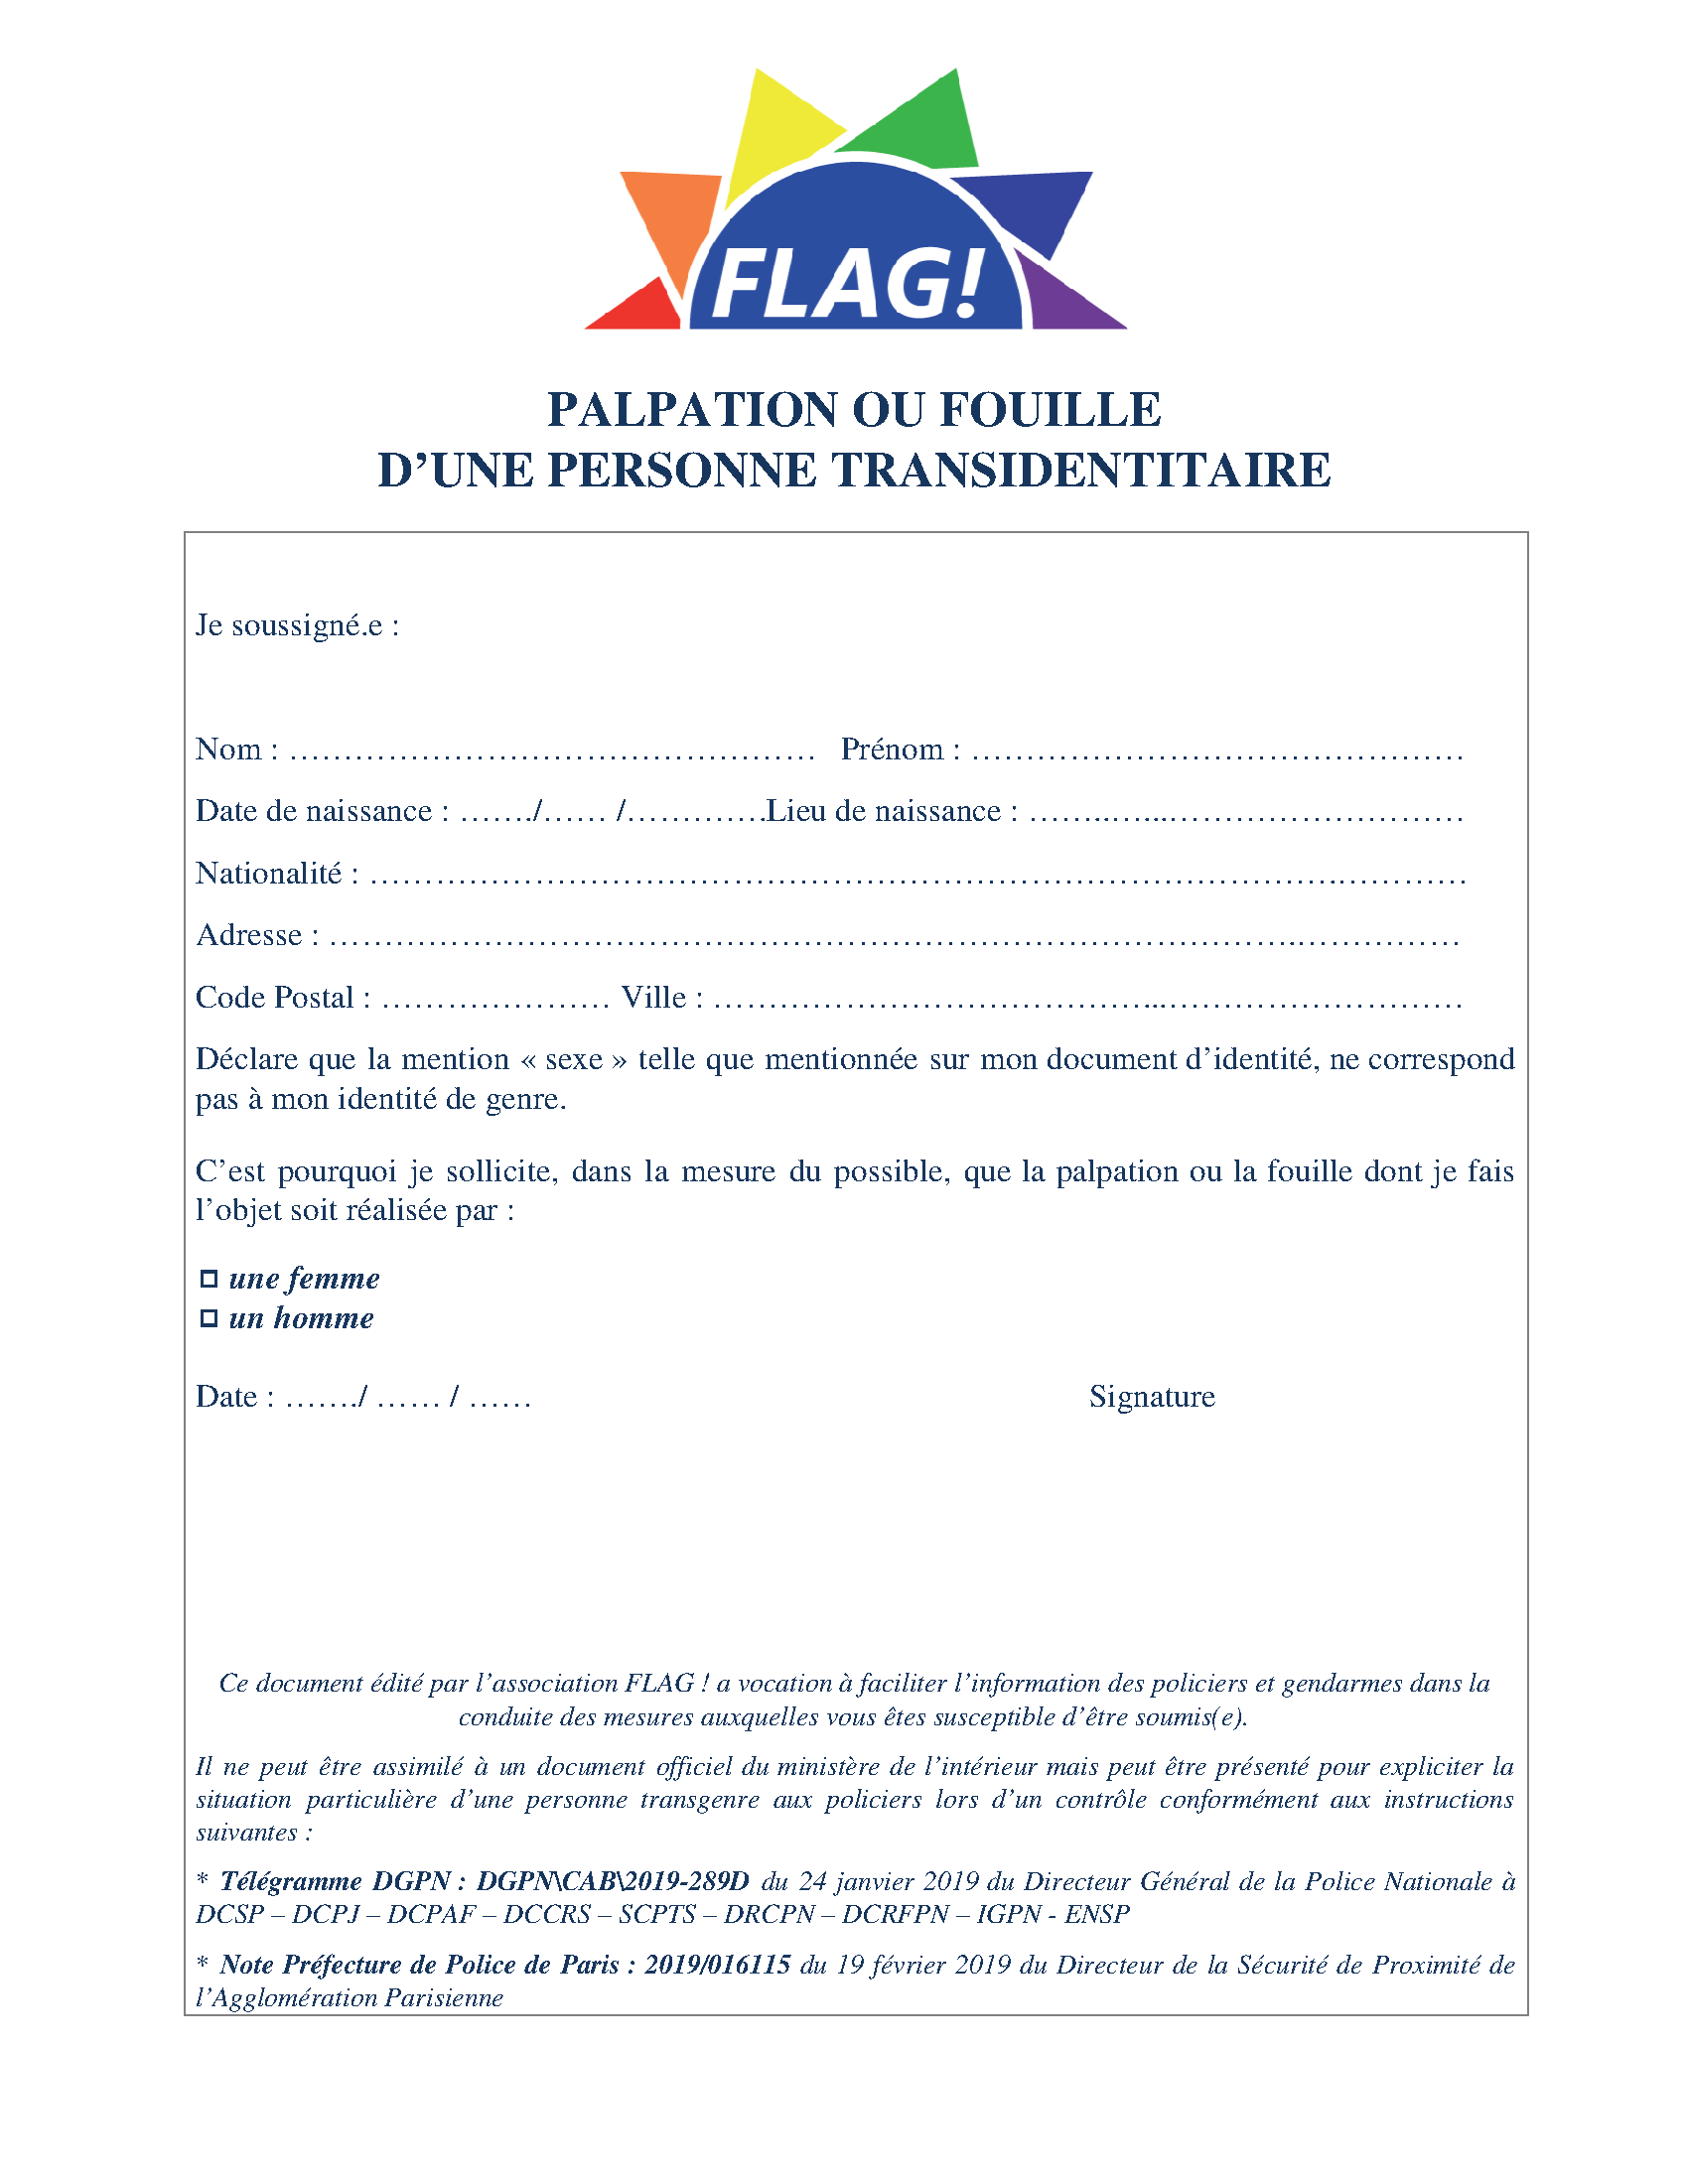 20191112 FLAG Formulaire palpation fouille V5